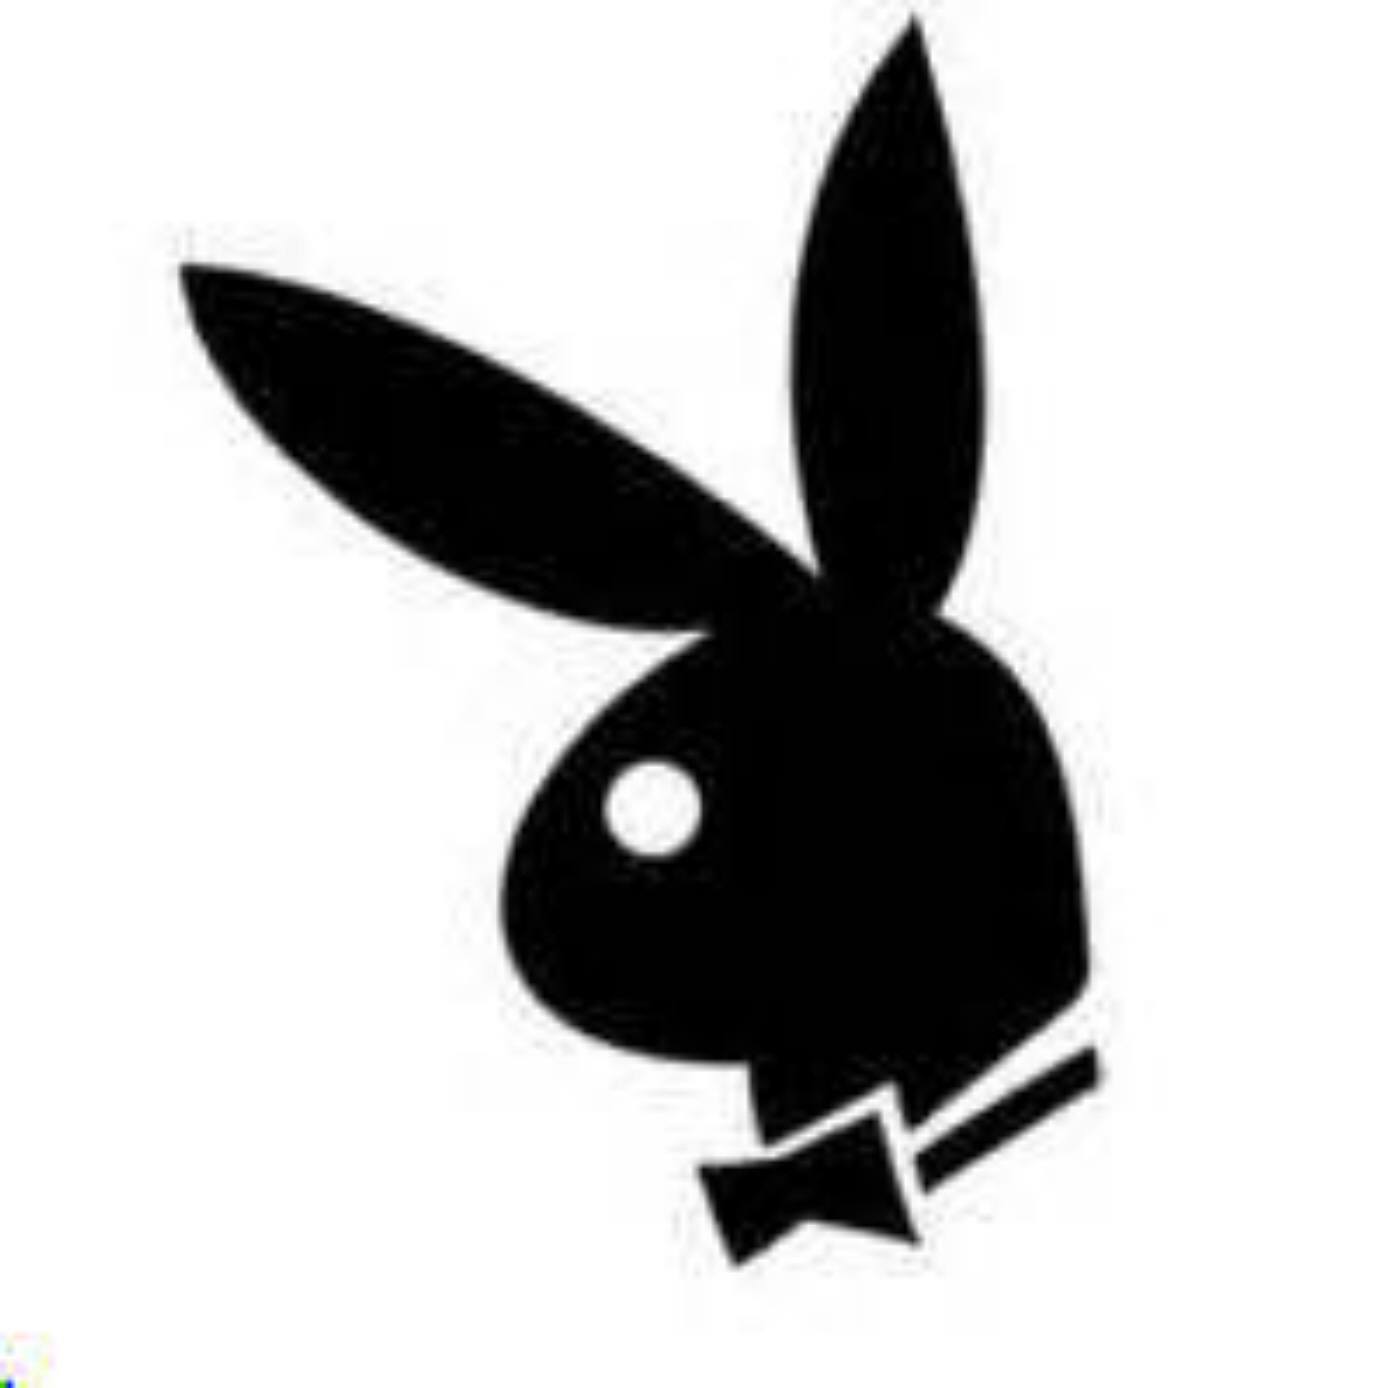 Download 21 playboy bunny decals silhouette drawing by HandmadeitemsbyKaren